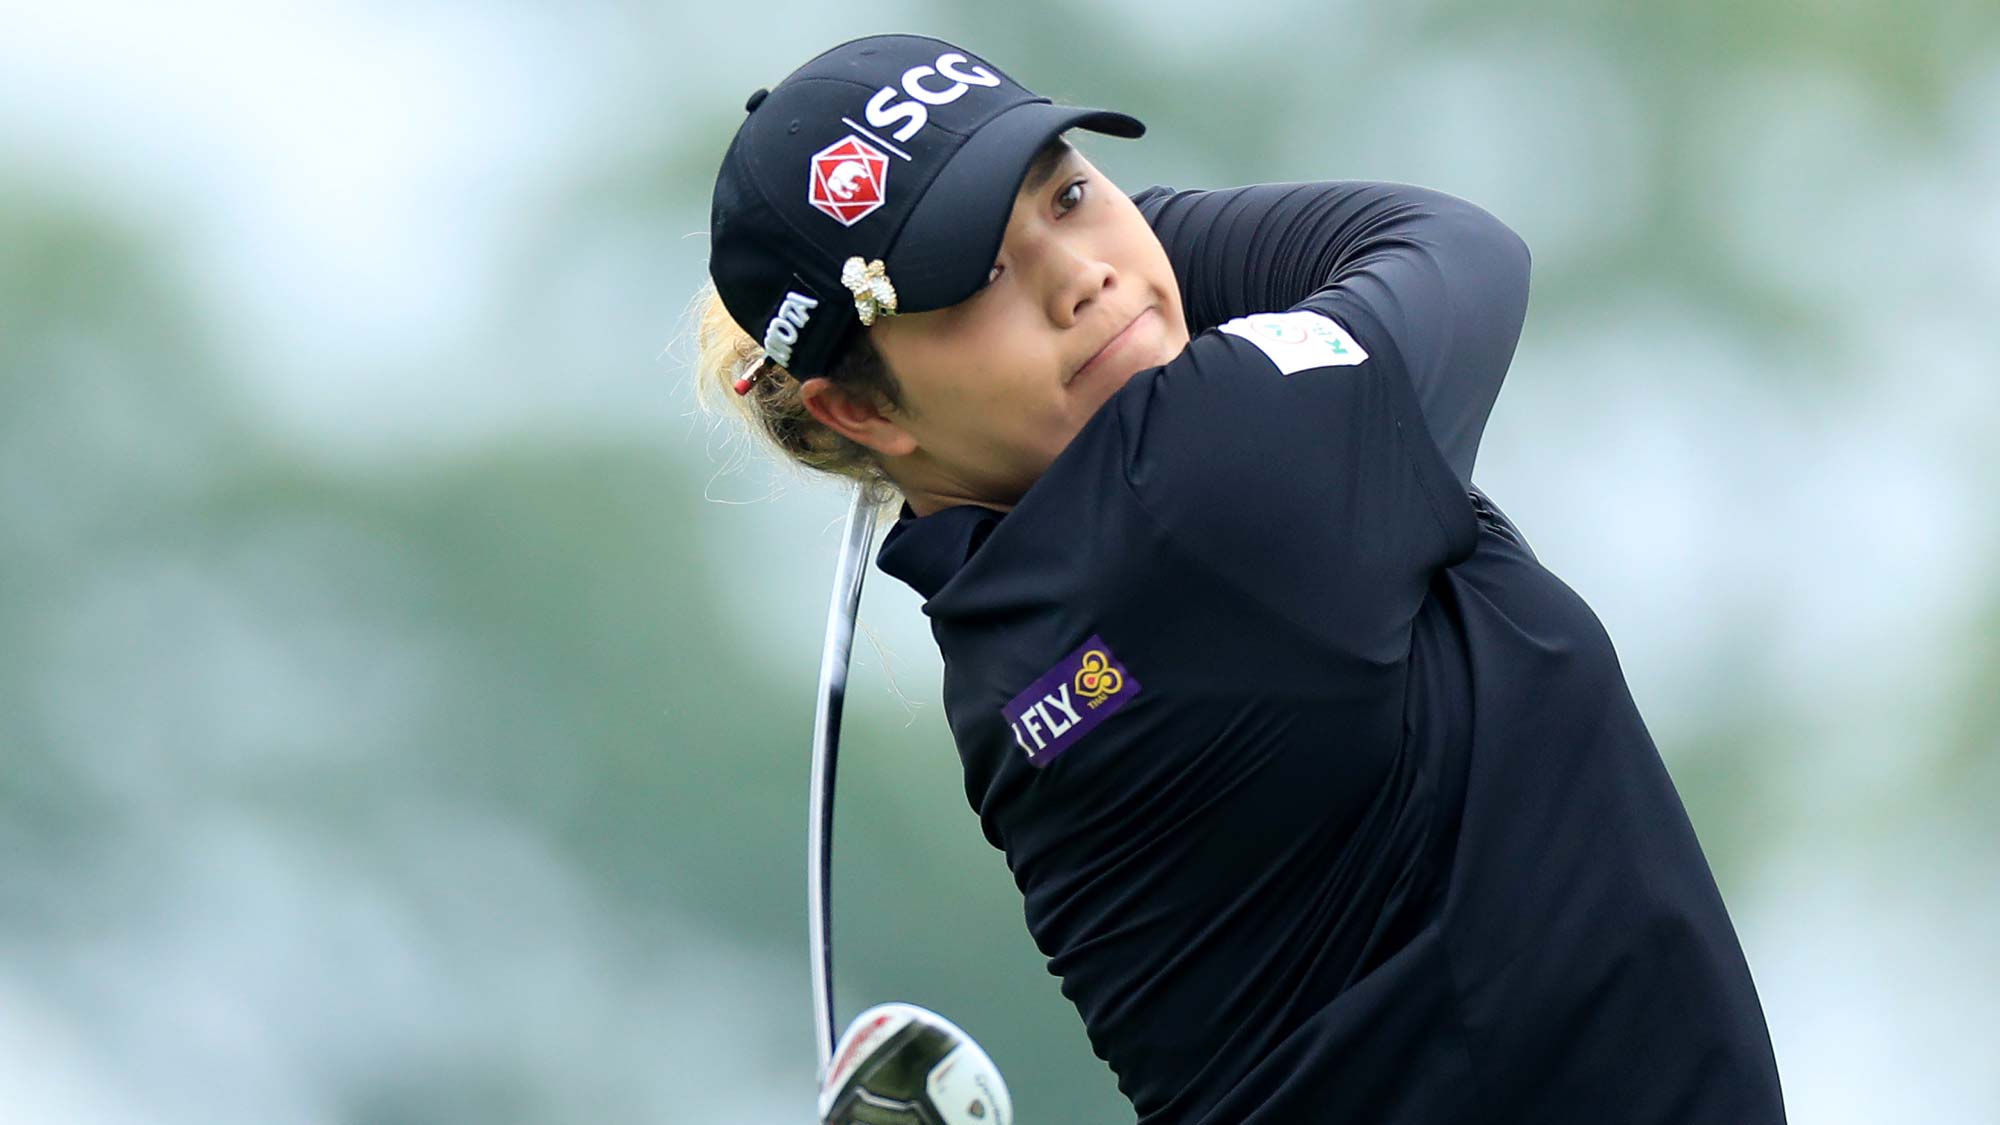 Ariya Jutanugarn of Thailand plays her tee shot on the par 5, third hole during the final round of the 2019 KPMG Women's PGA Championship